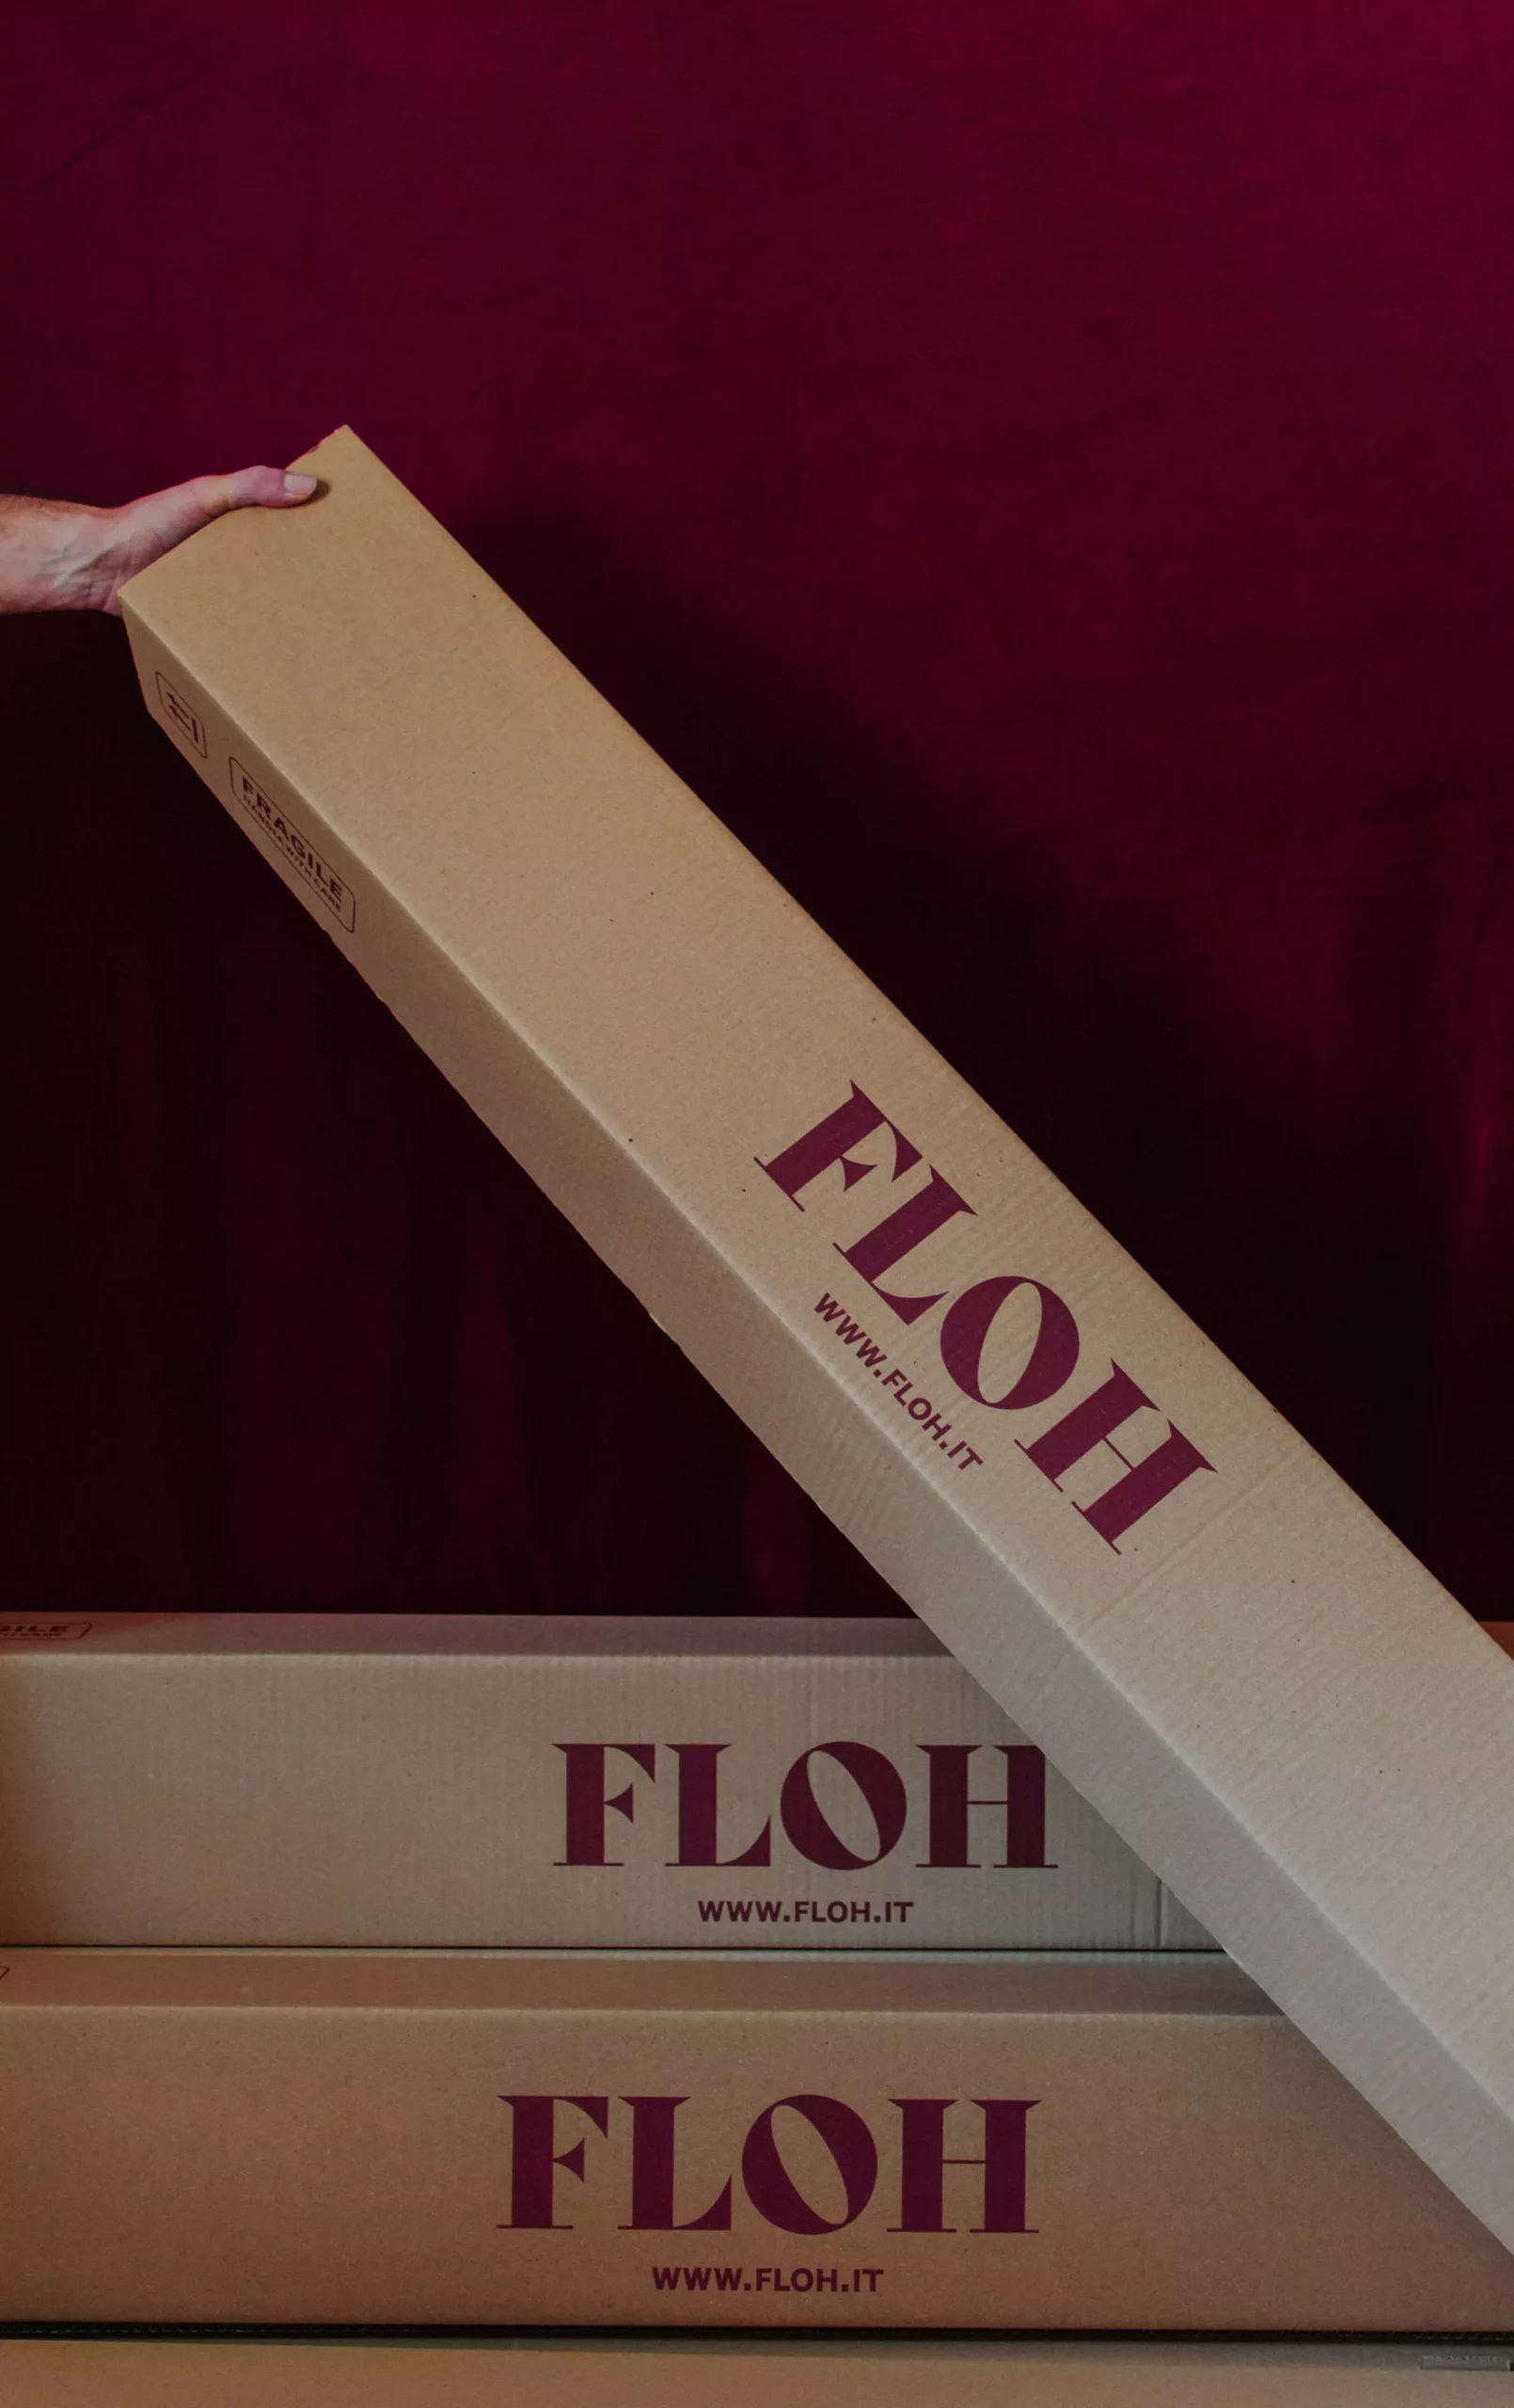 Floh Brand Identity - Packaging Design